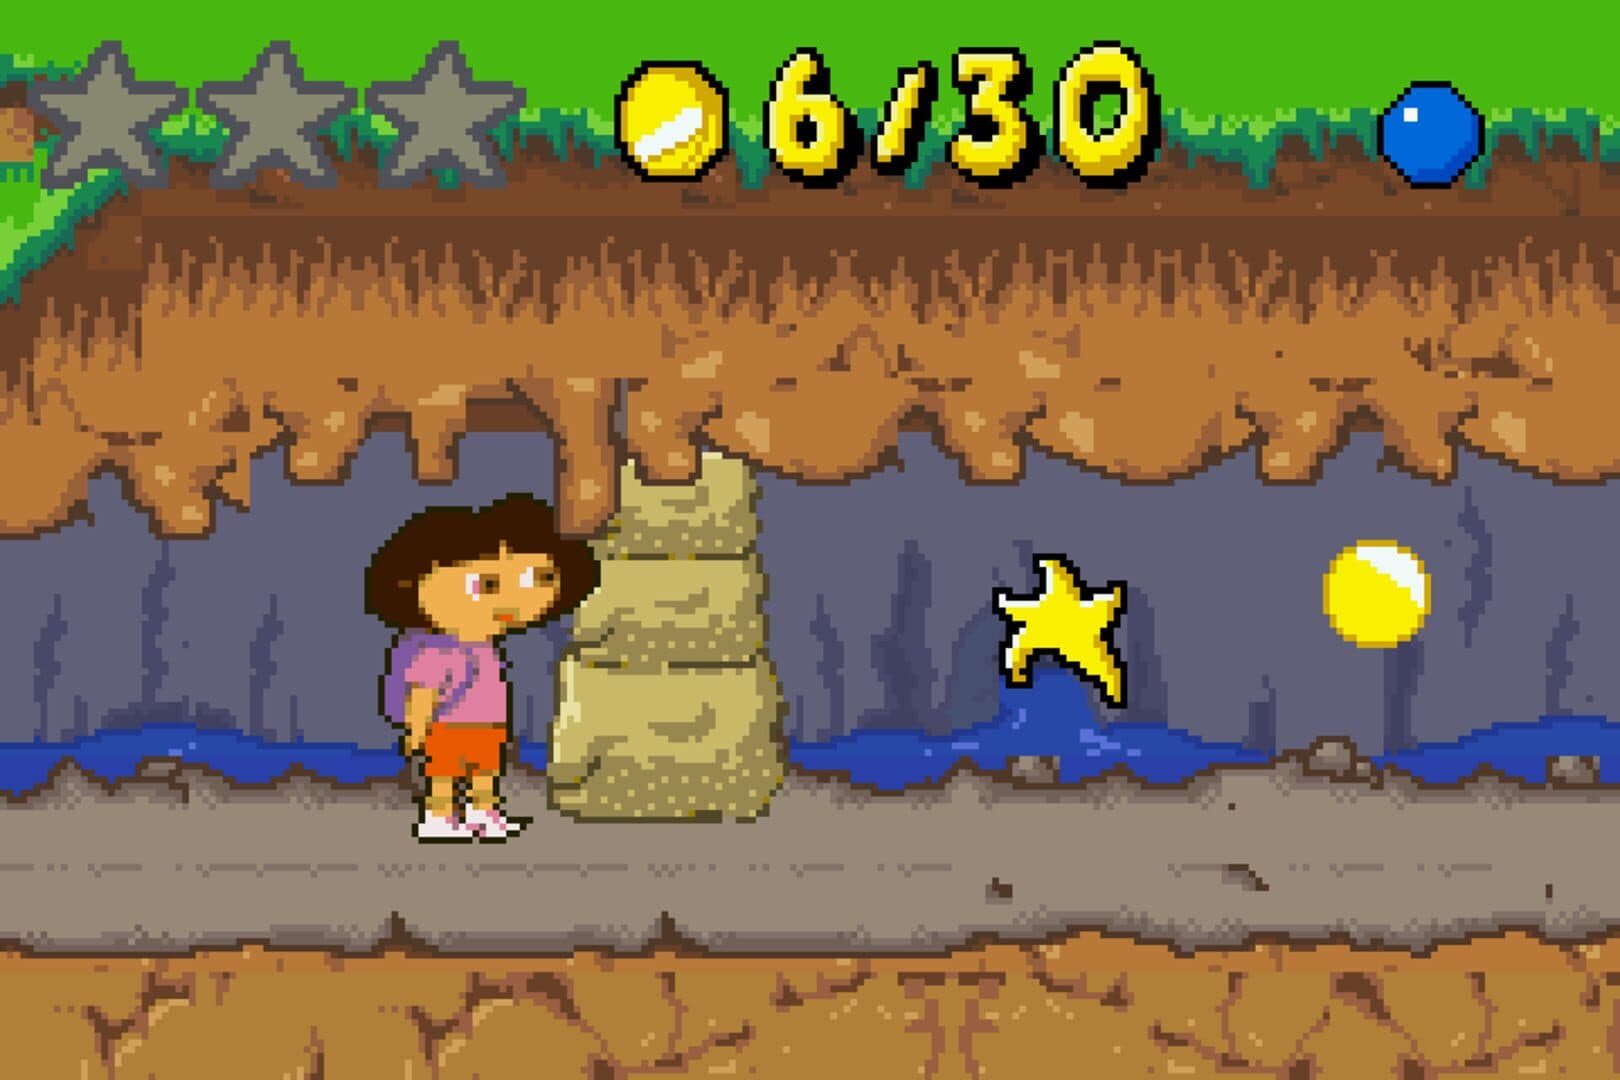 2 Games in One Double Pack | Dora the Explorer: Pirate Pig's Treasure & Dora the Explorer: Super Star Adventures Image